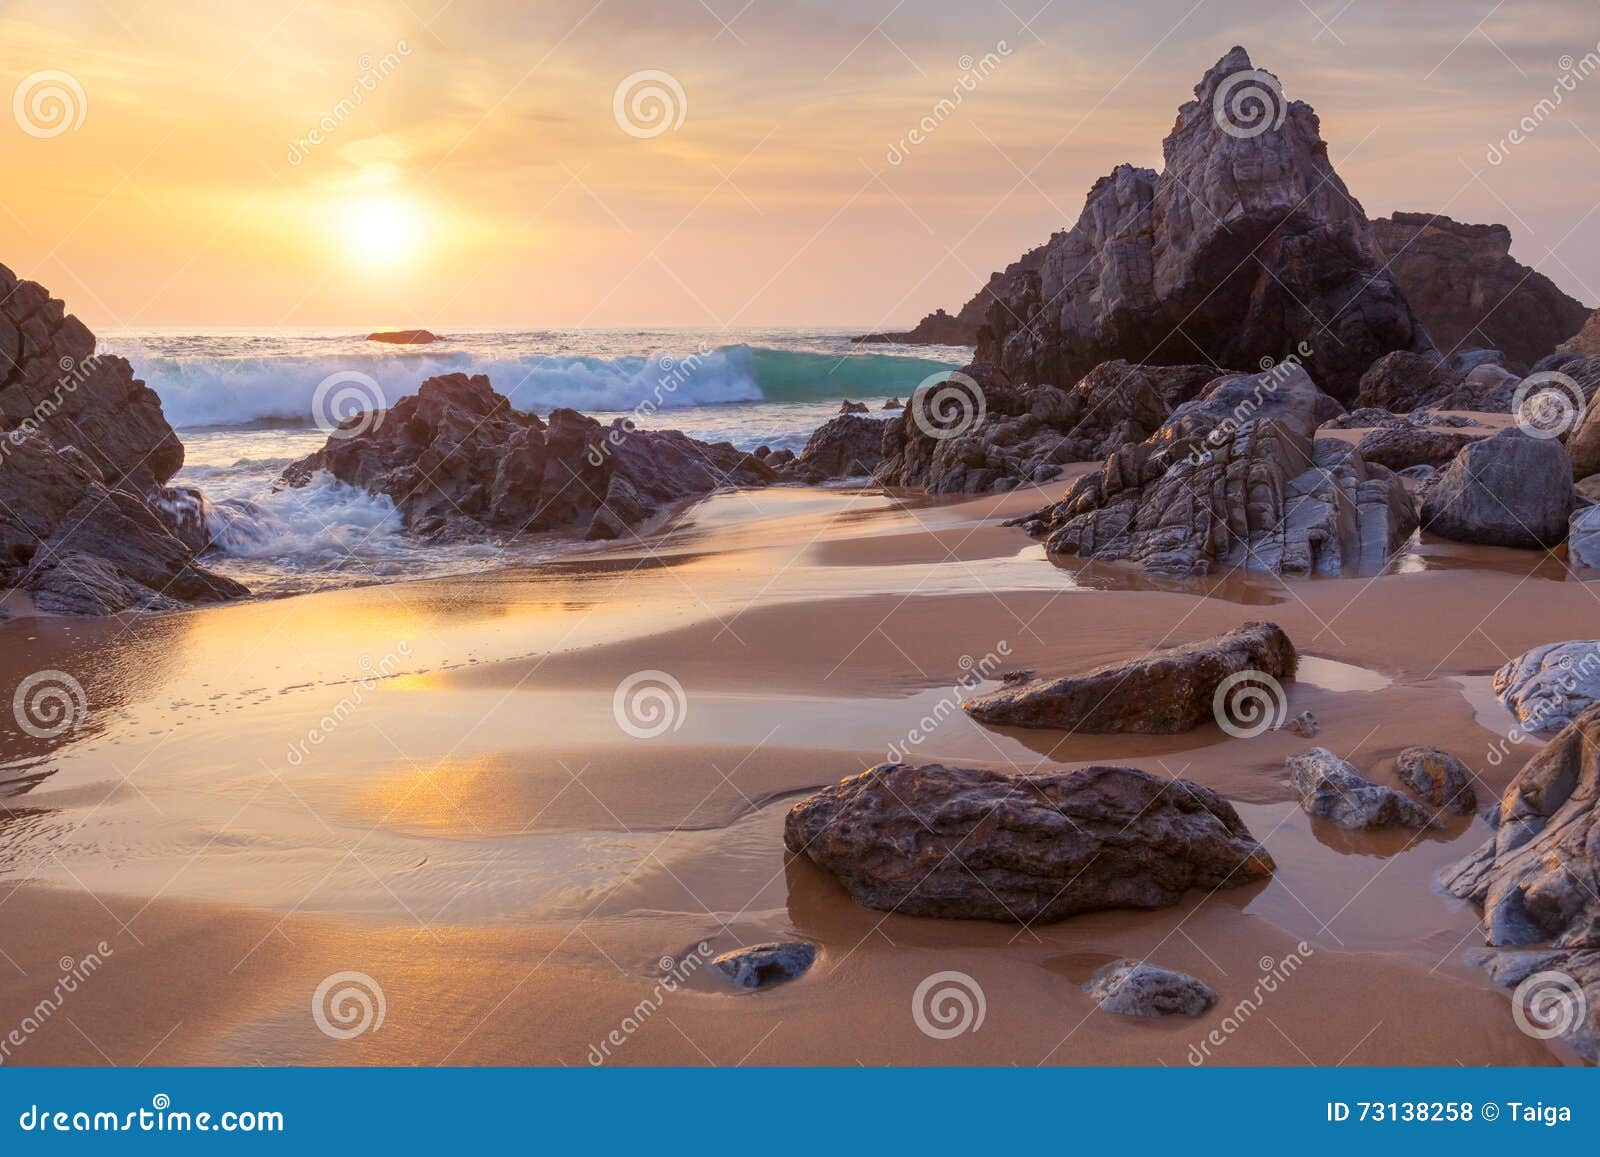 fantastic big rocks and ocean waves at golden sundown